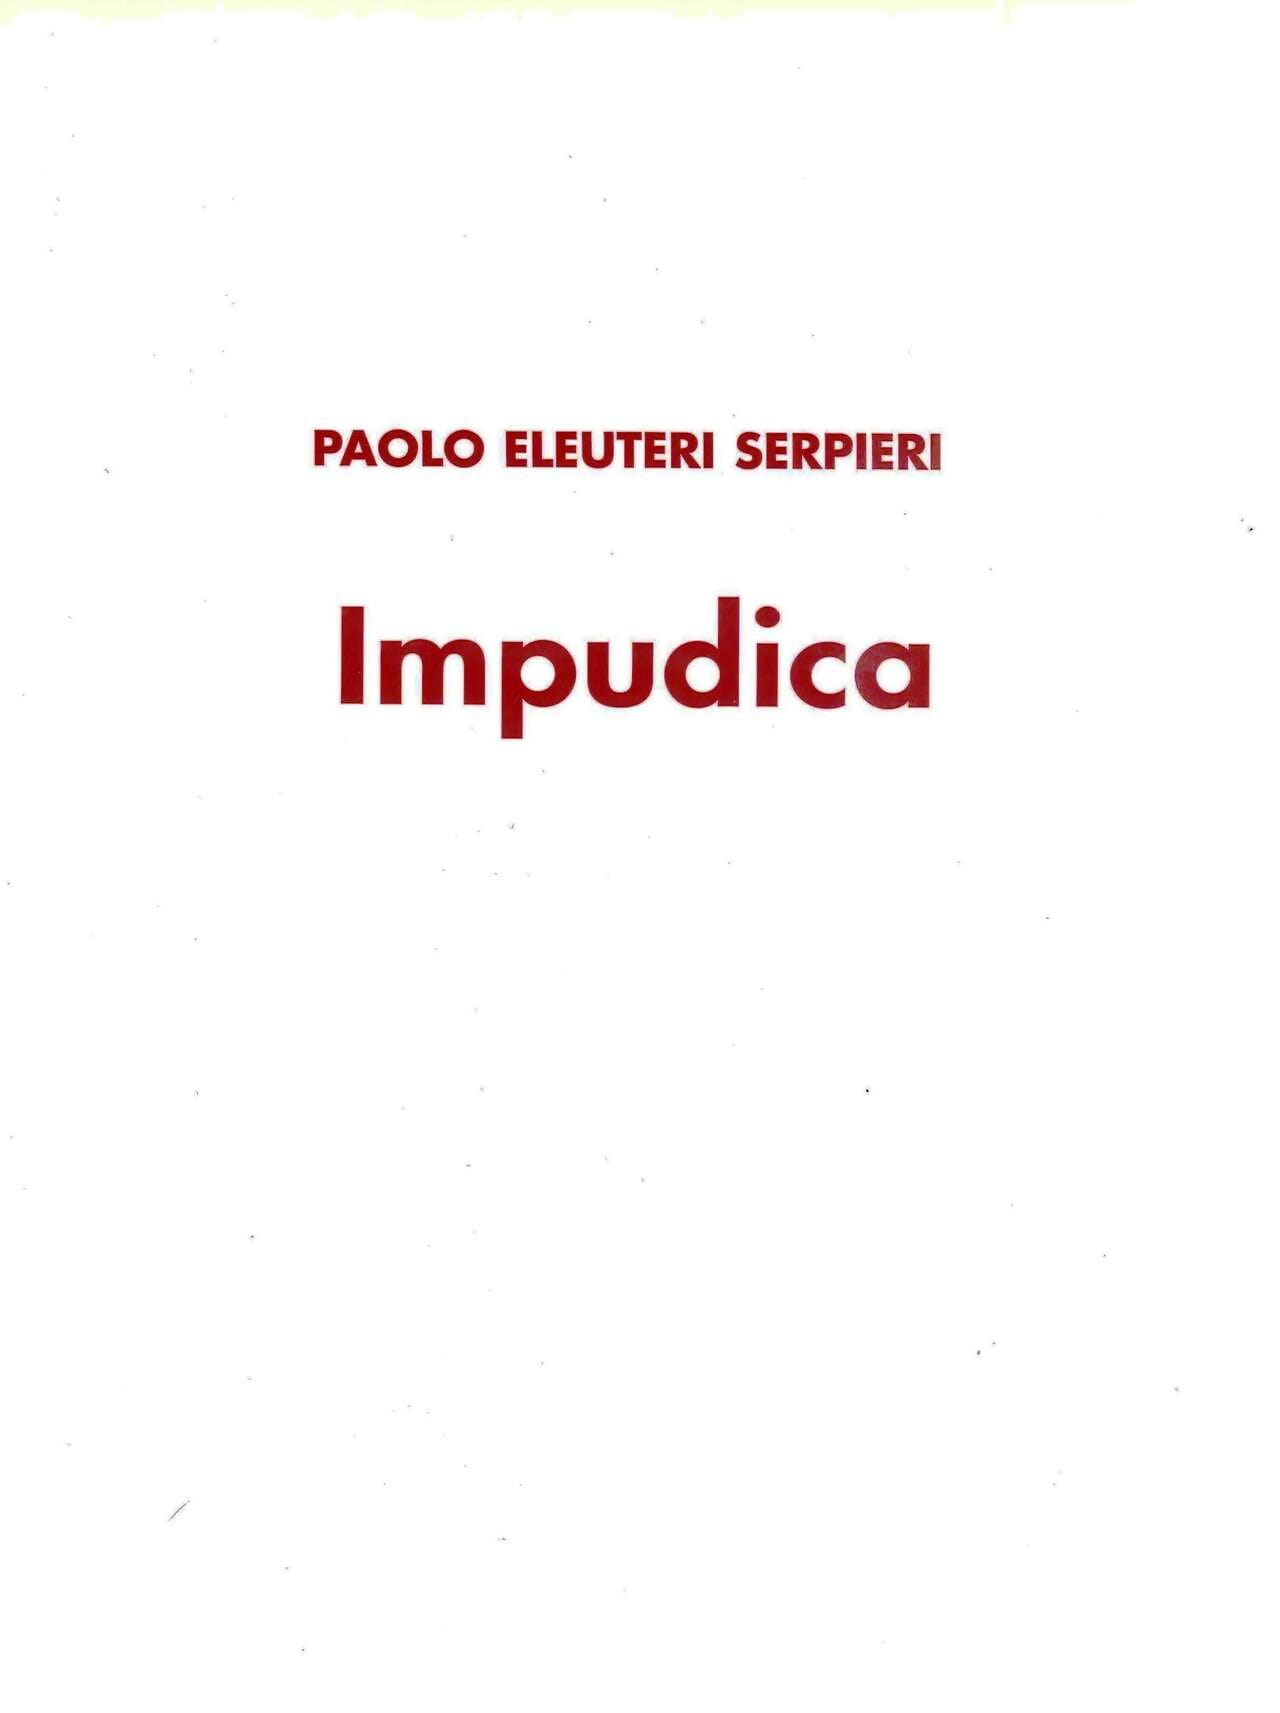 Losstaande Albums Van Paolo Eleuterie Serpieri - Impudica page 1